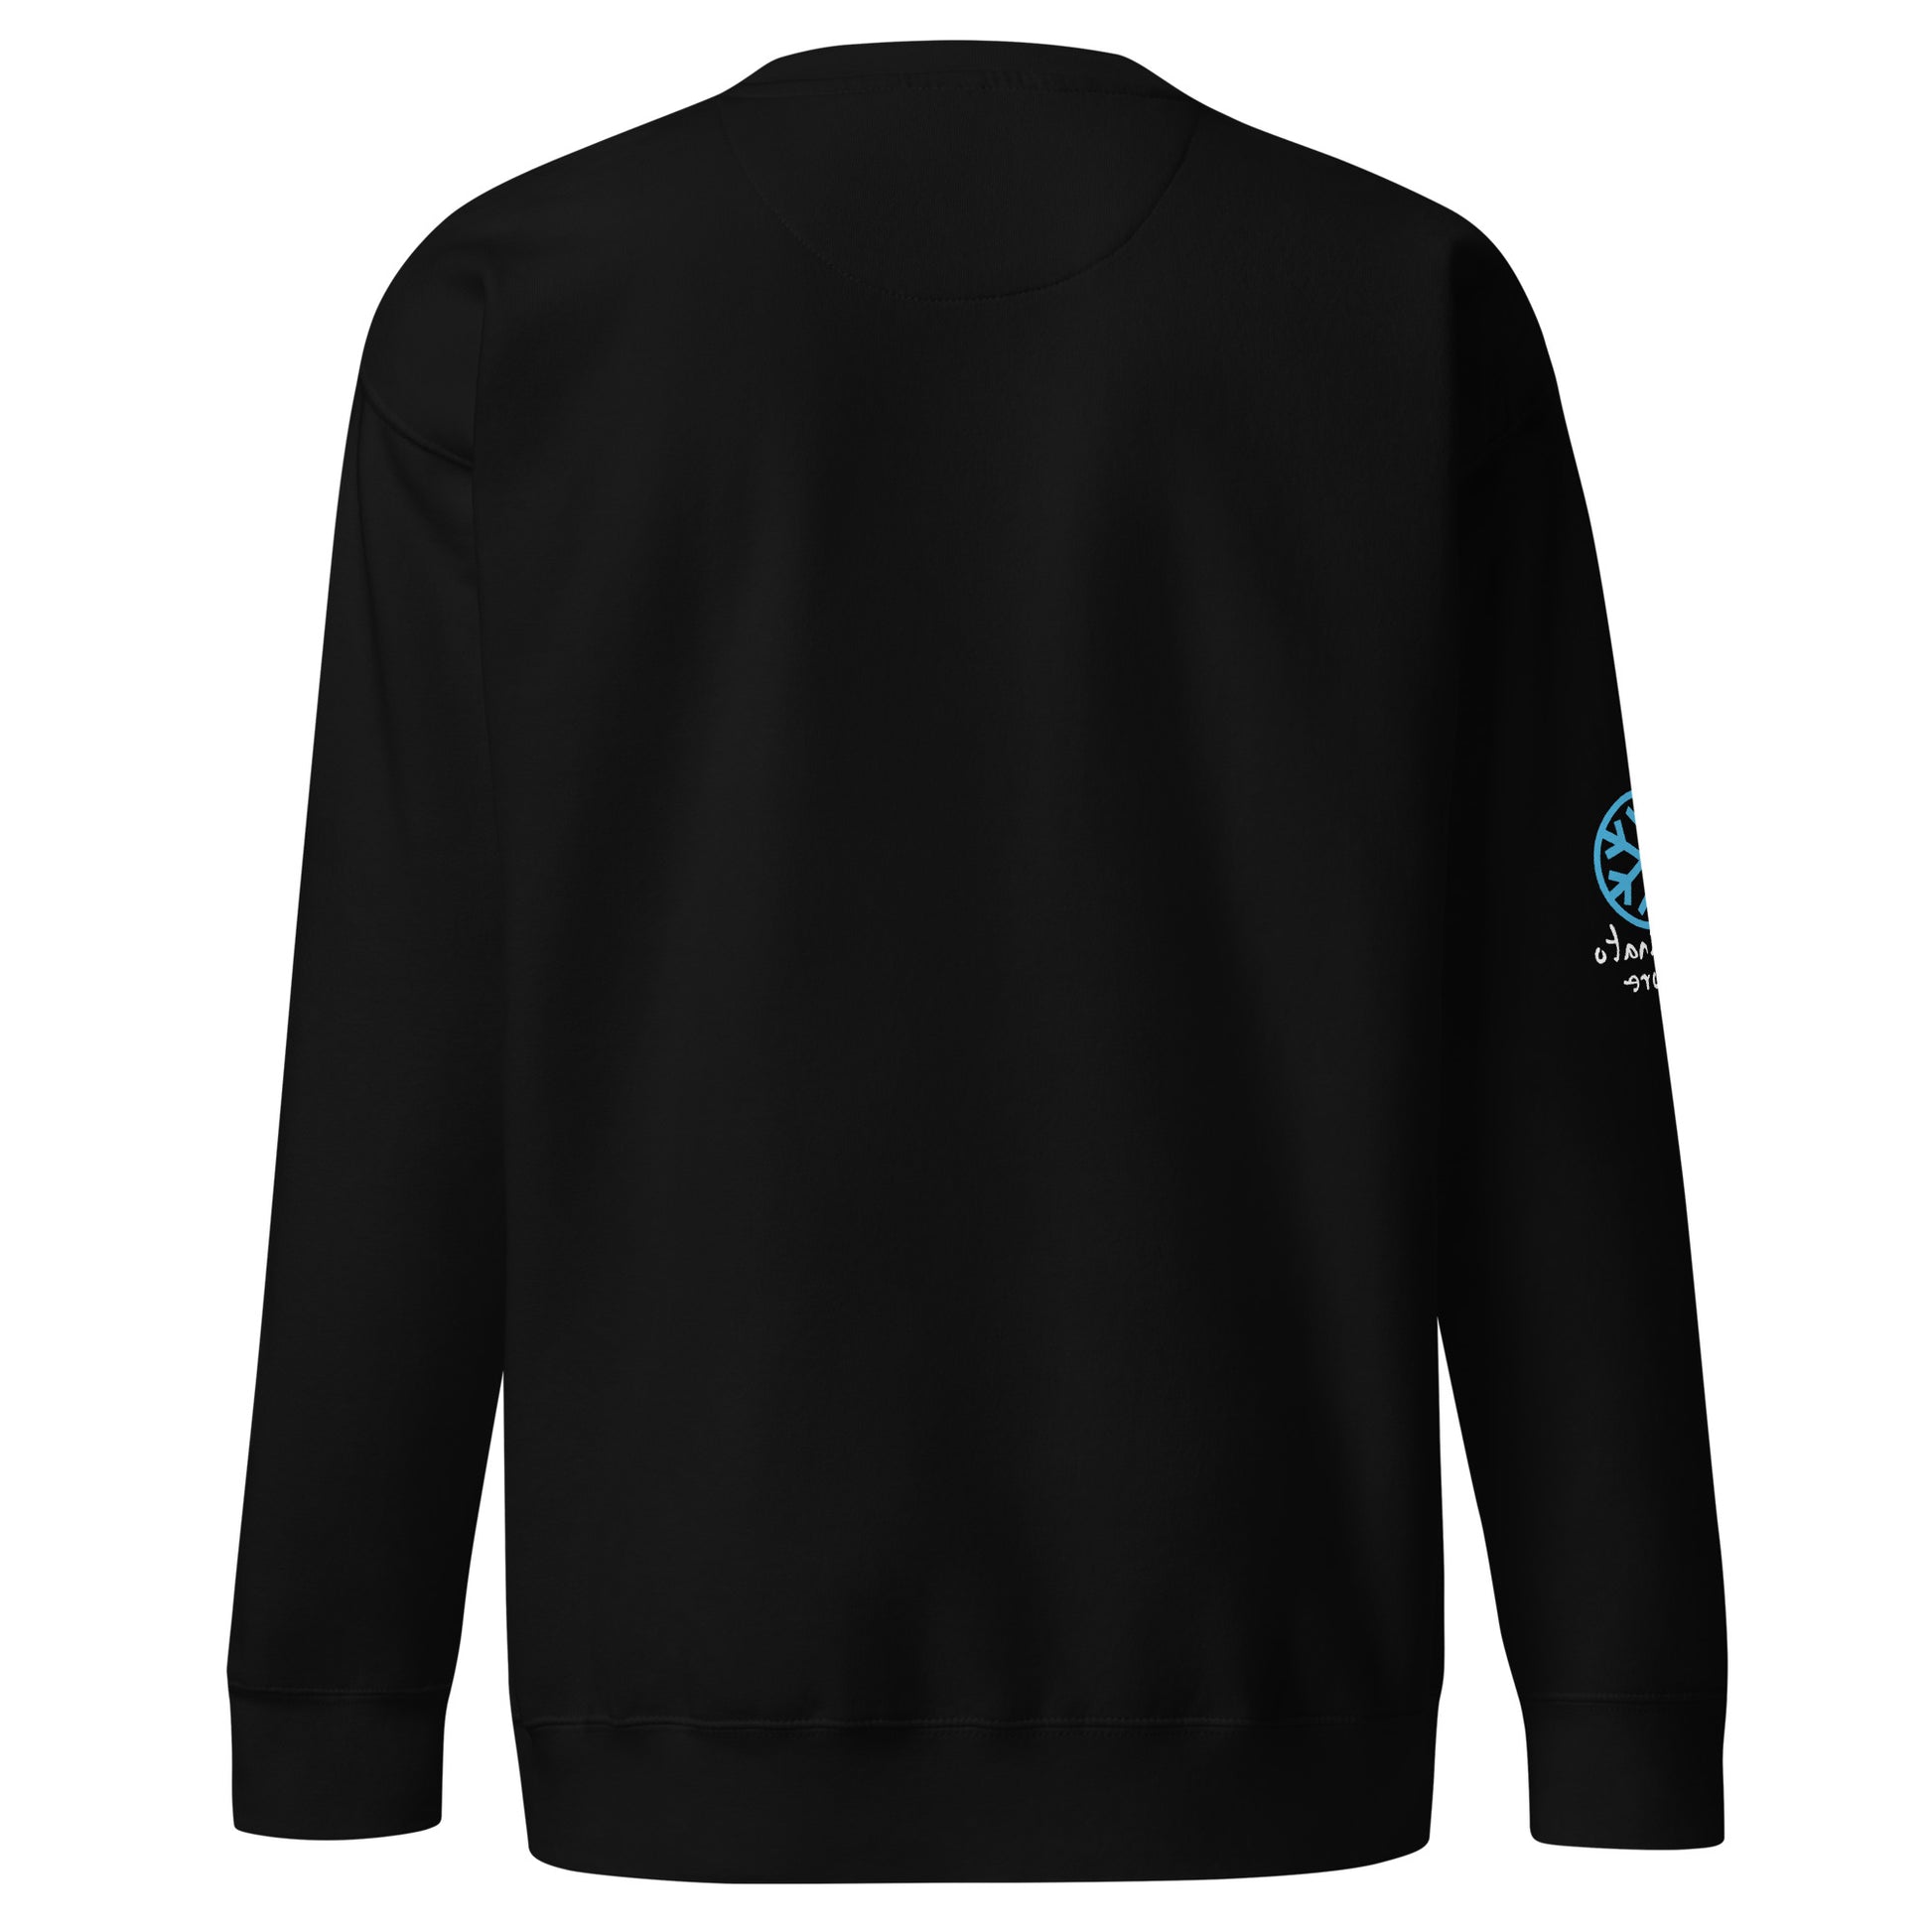 back of sweatshirt Leonardo black by B.Different Clothing independent streetwear brand inspired by street art graffiti